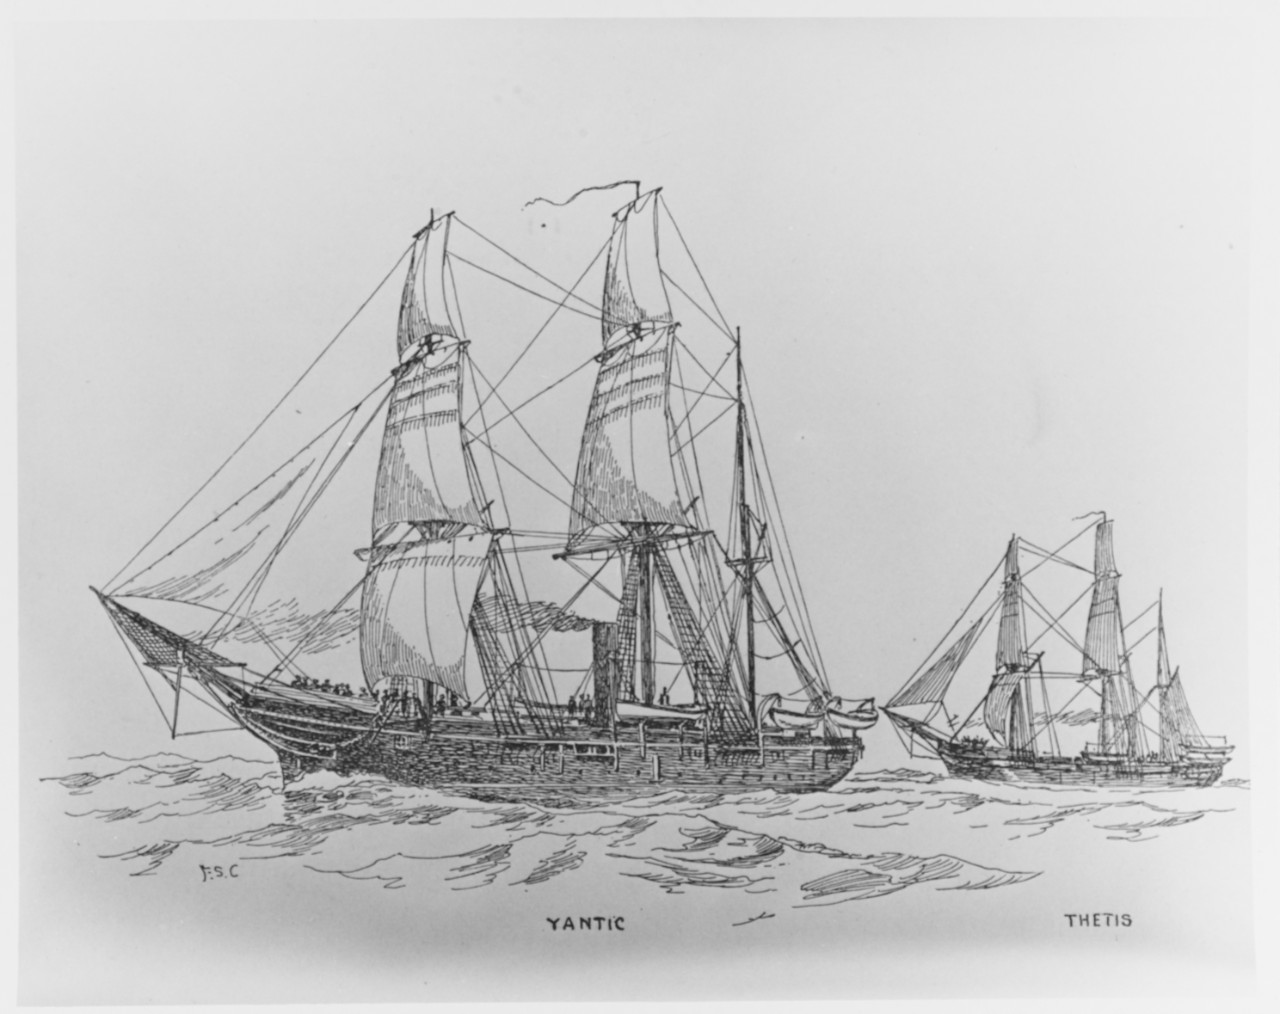 USS YANTIC and USS THETIS